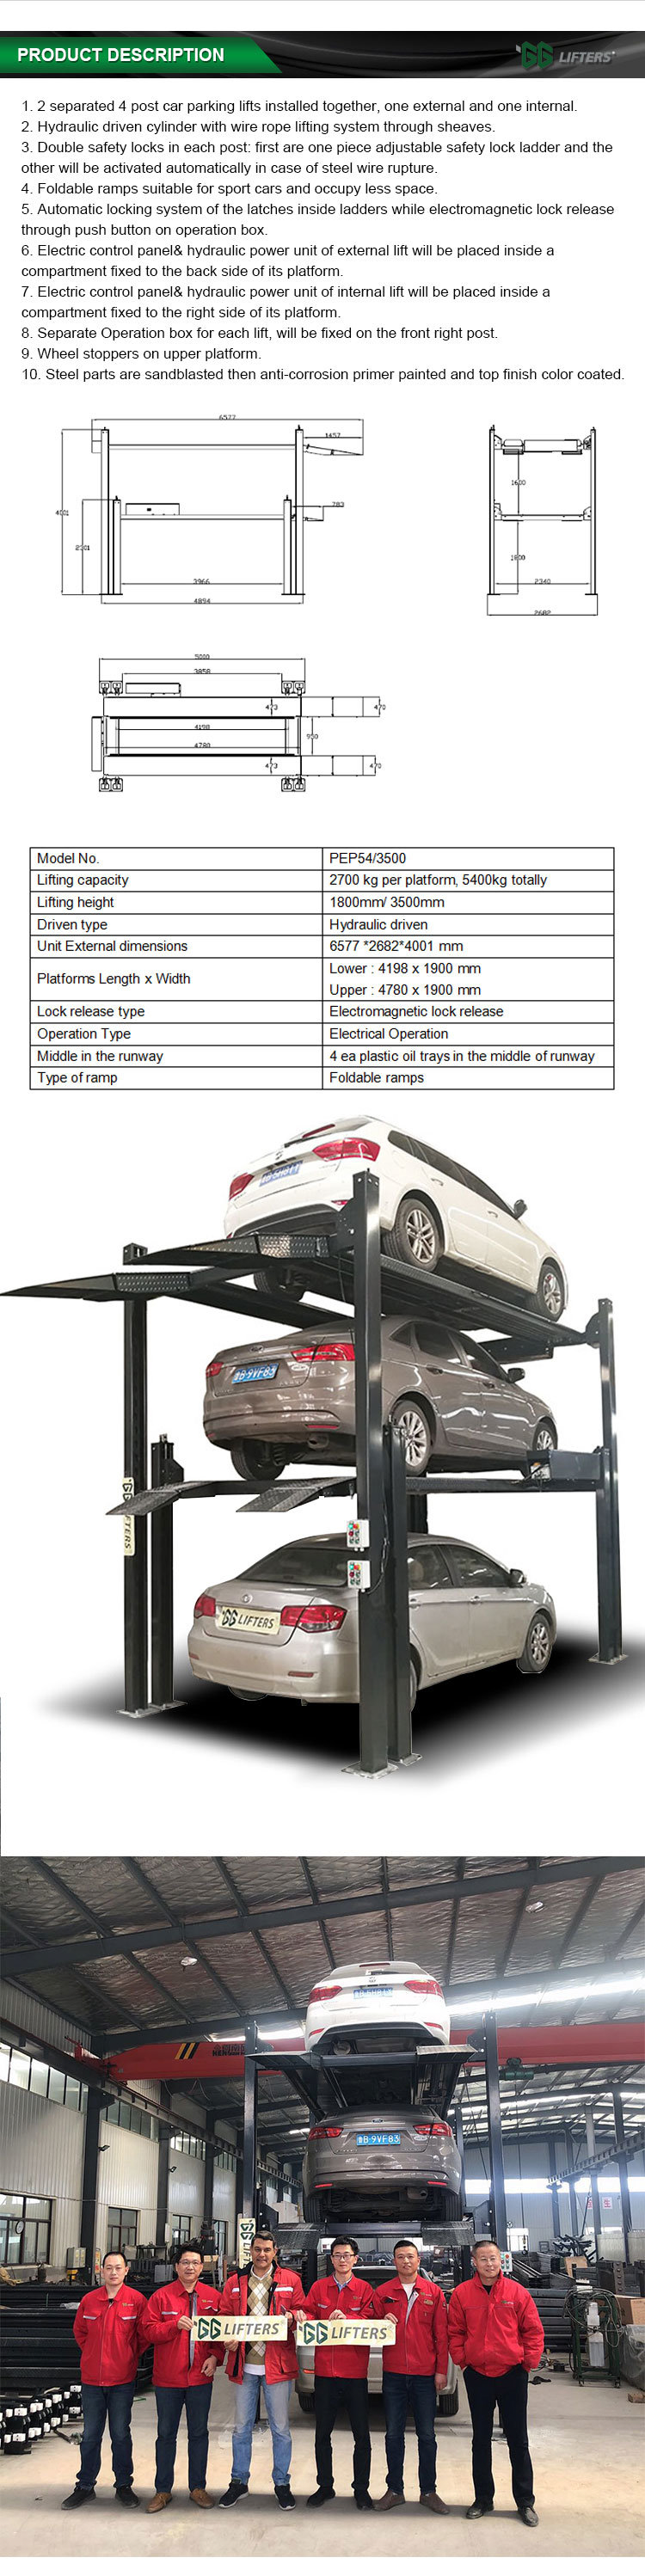 CE certified 3 car parking solution triple stacker lift manufacturer